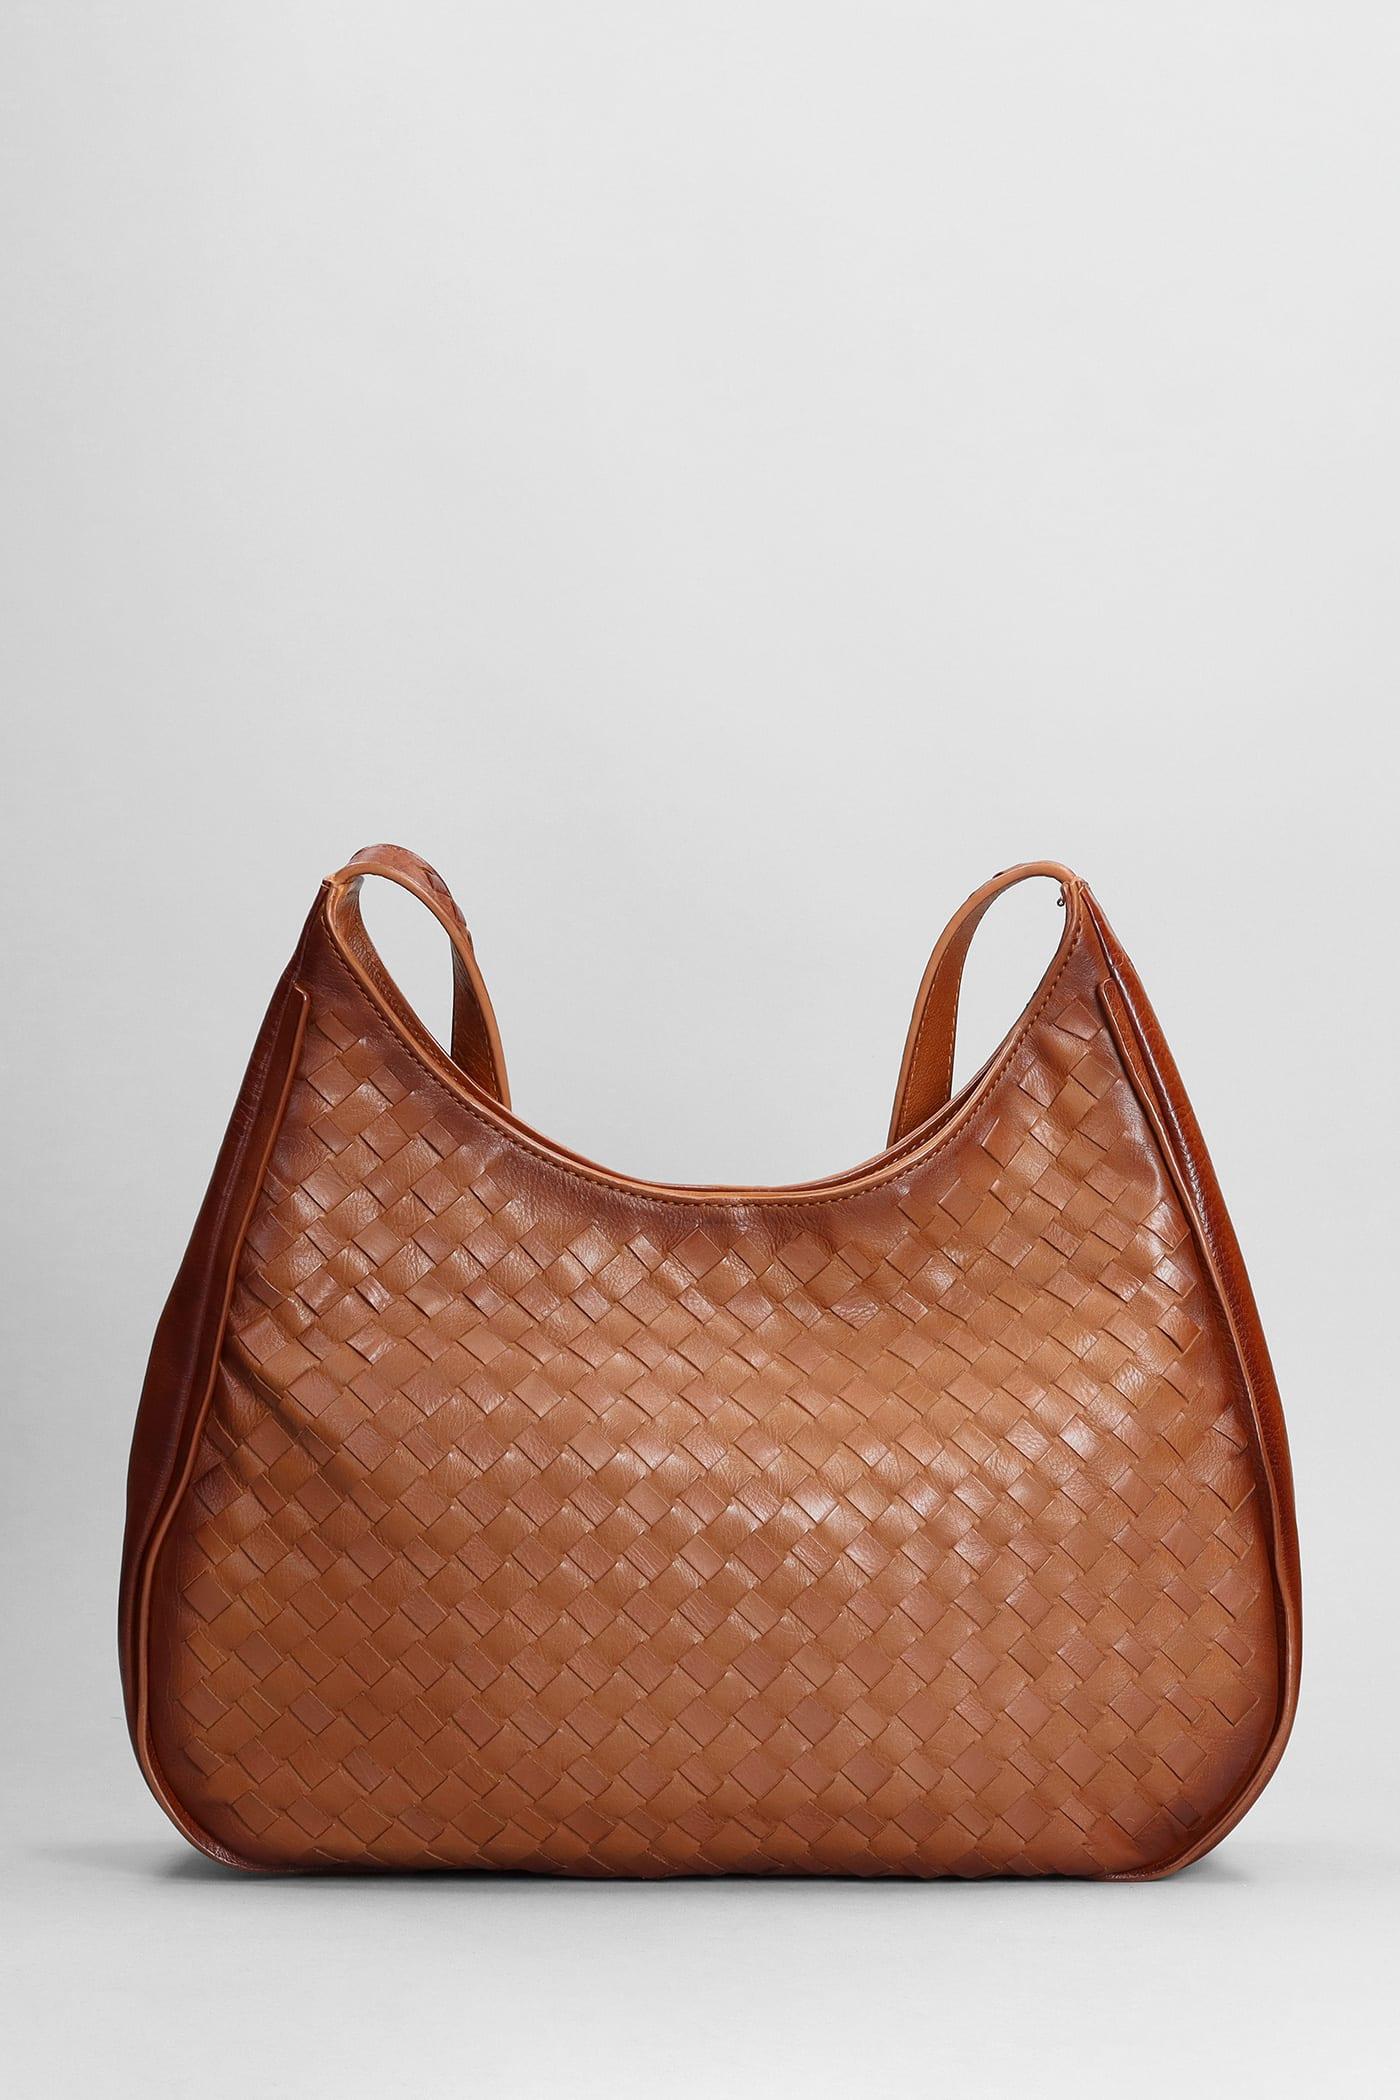 Dragon Diffusion - Zak Hobo Tan Woven Leather Bag